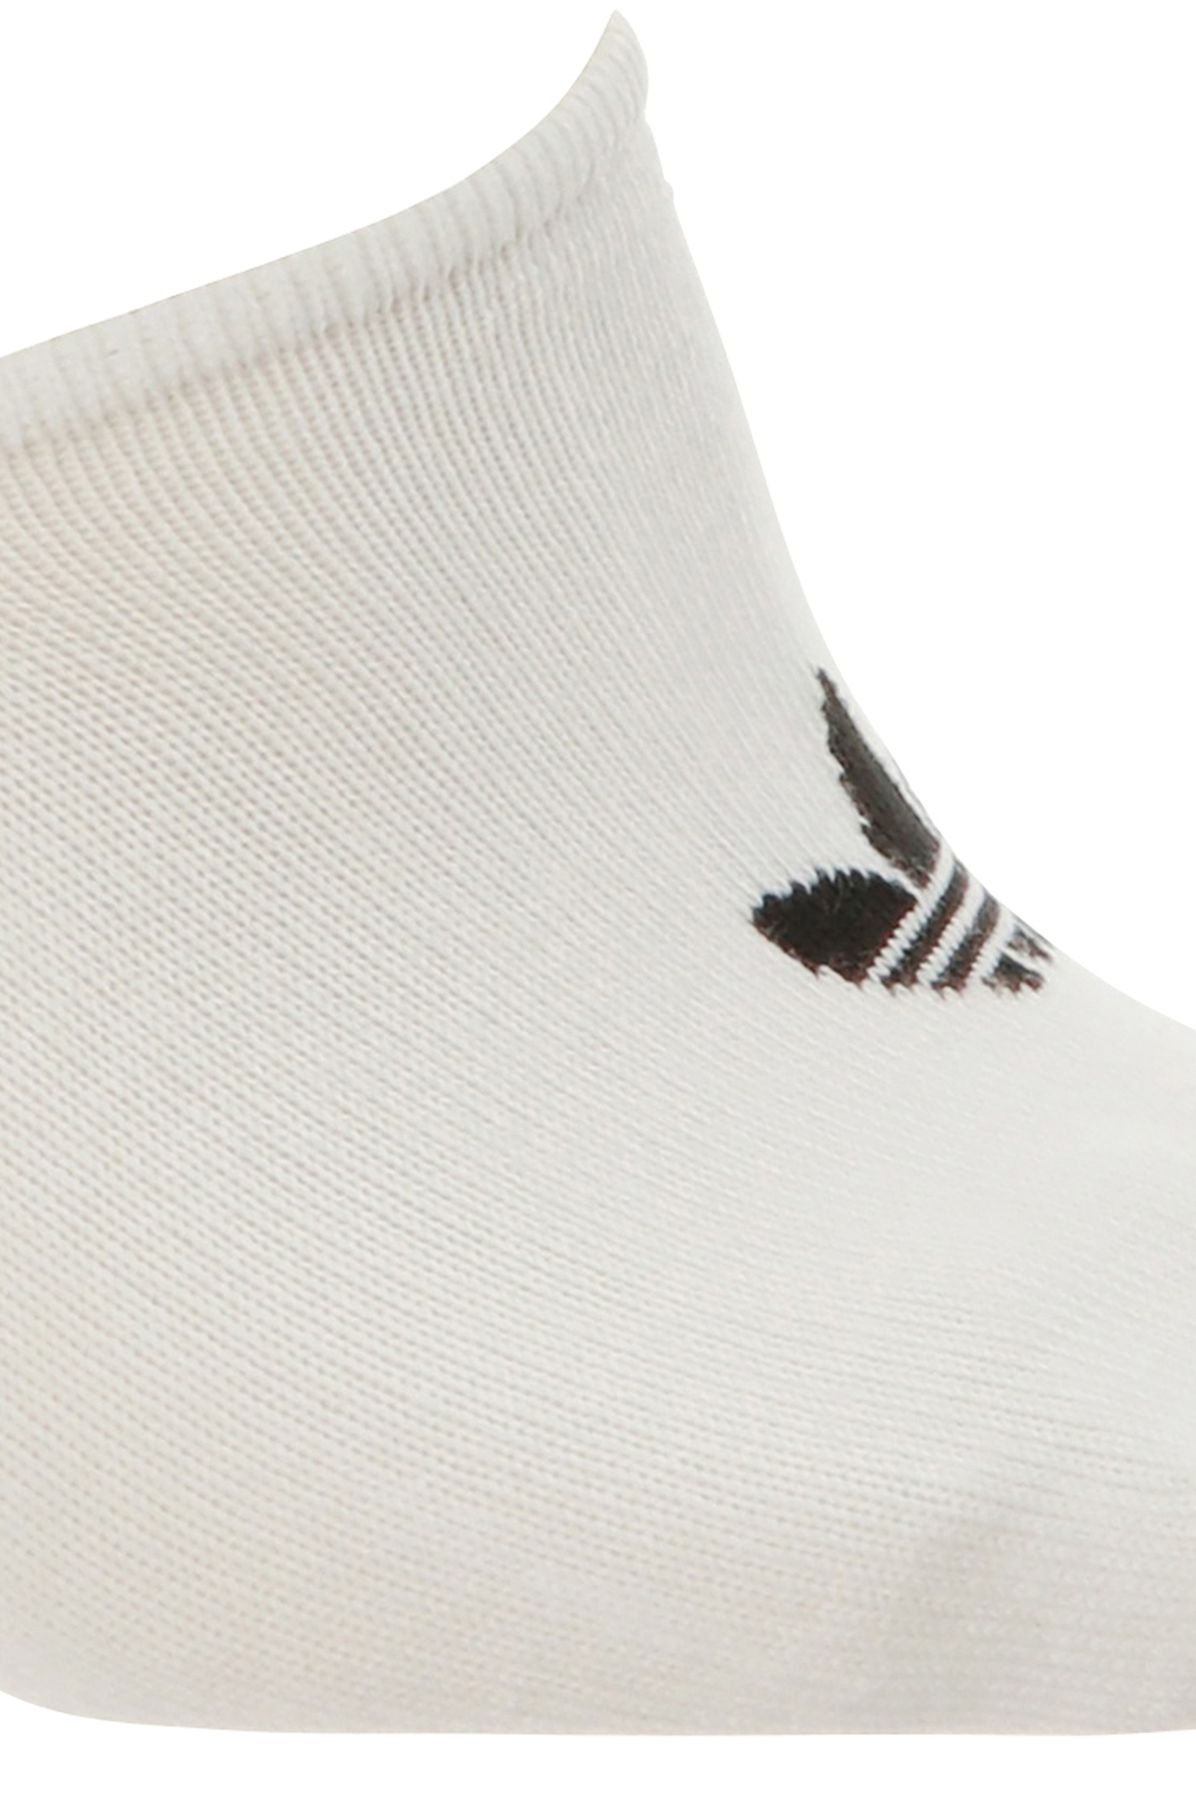 Adidas Originals Socks 3-pack